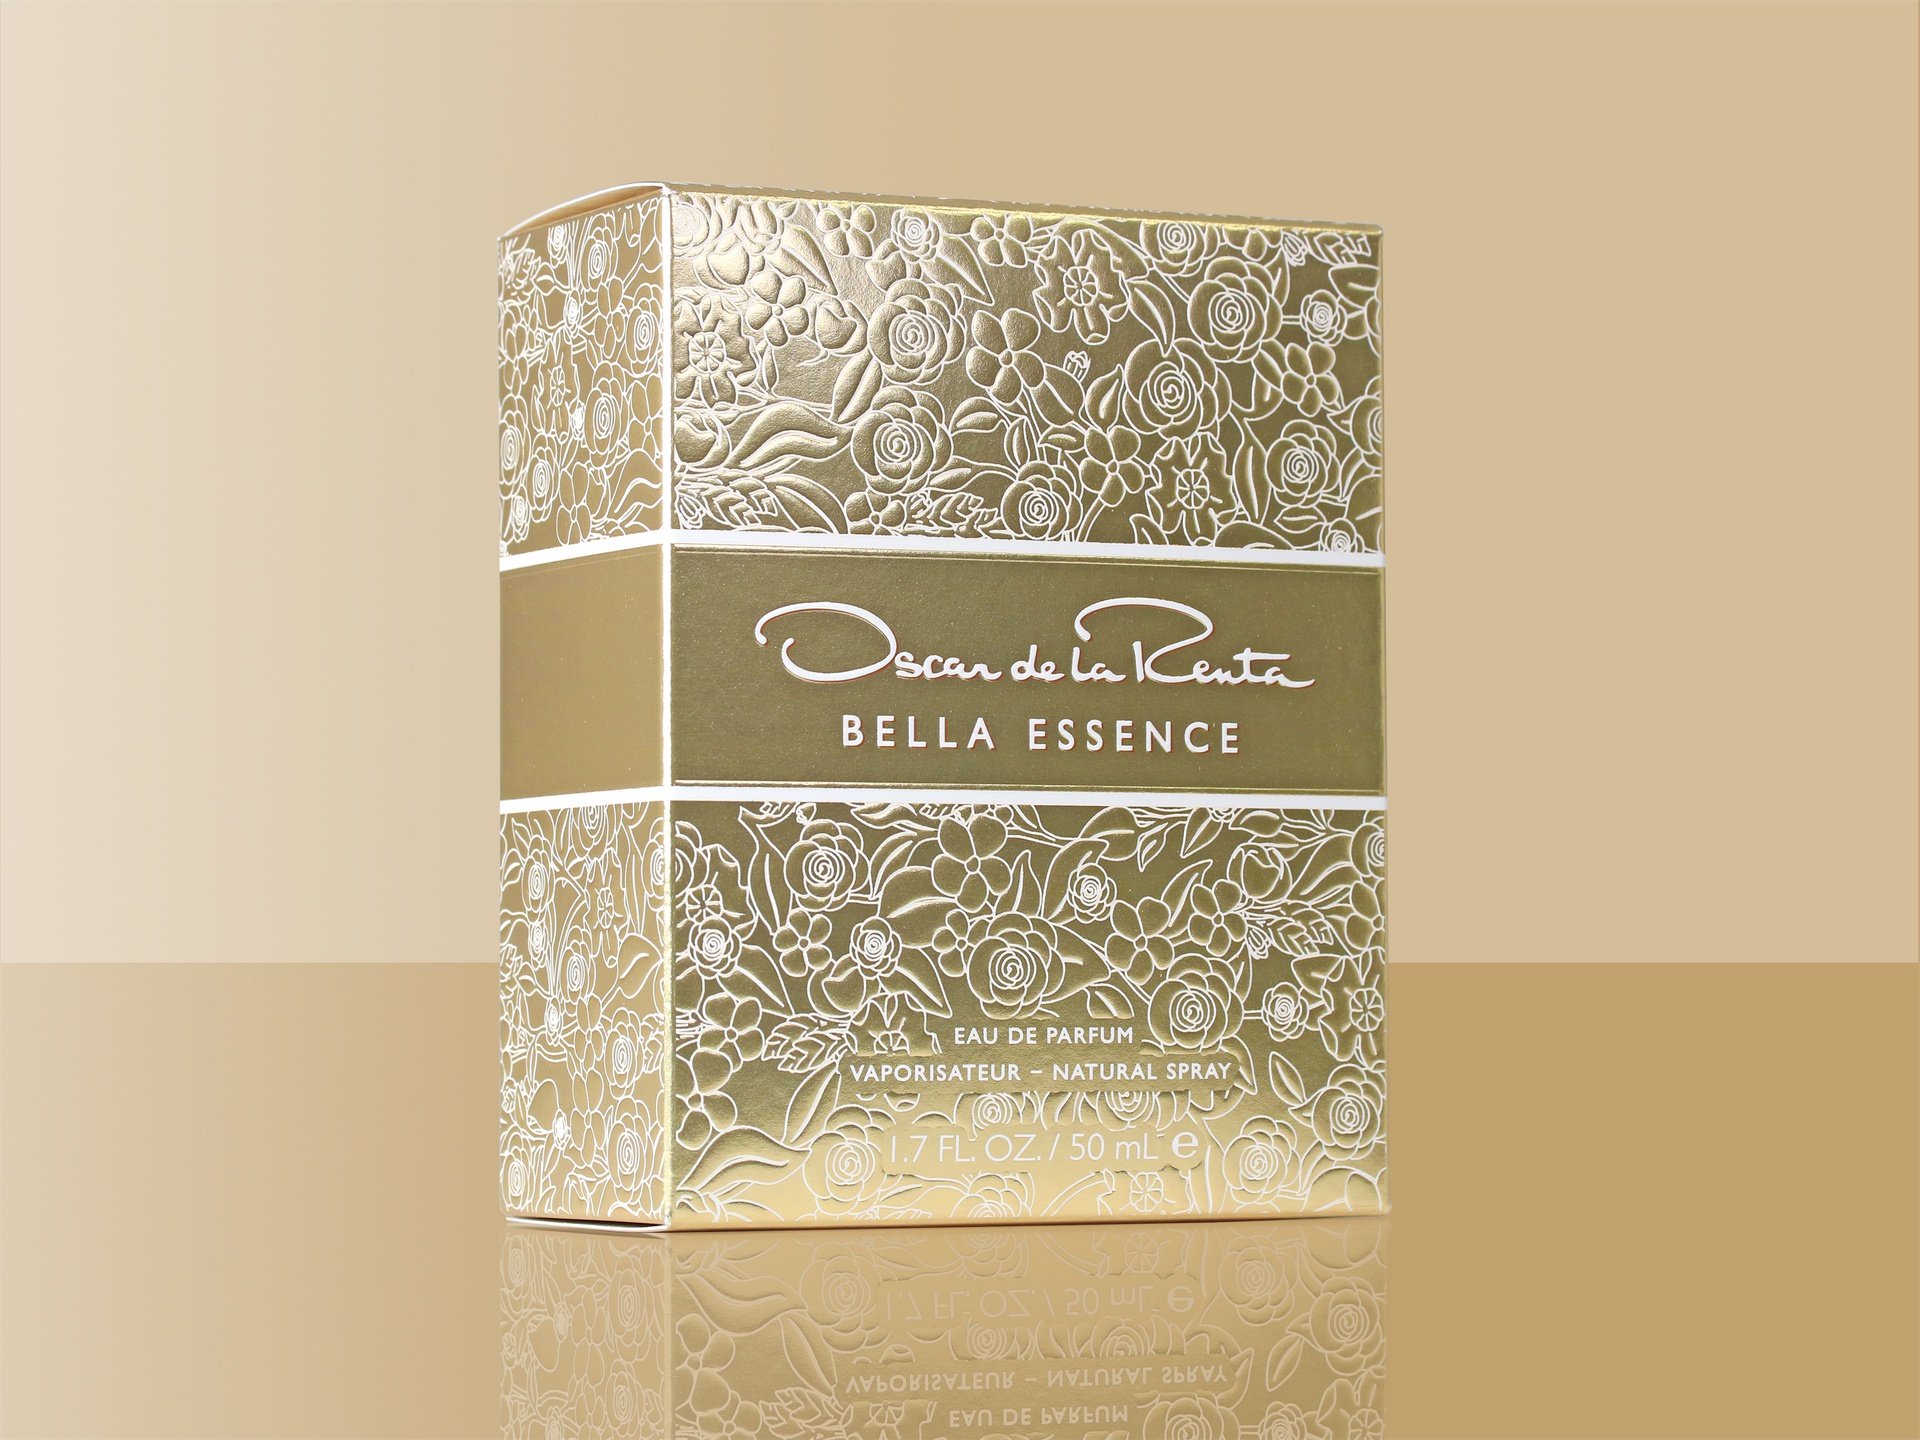 Oscar de la Renta Bella Essence packaging